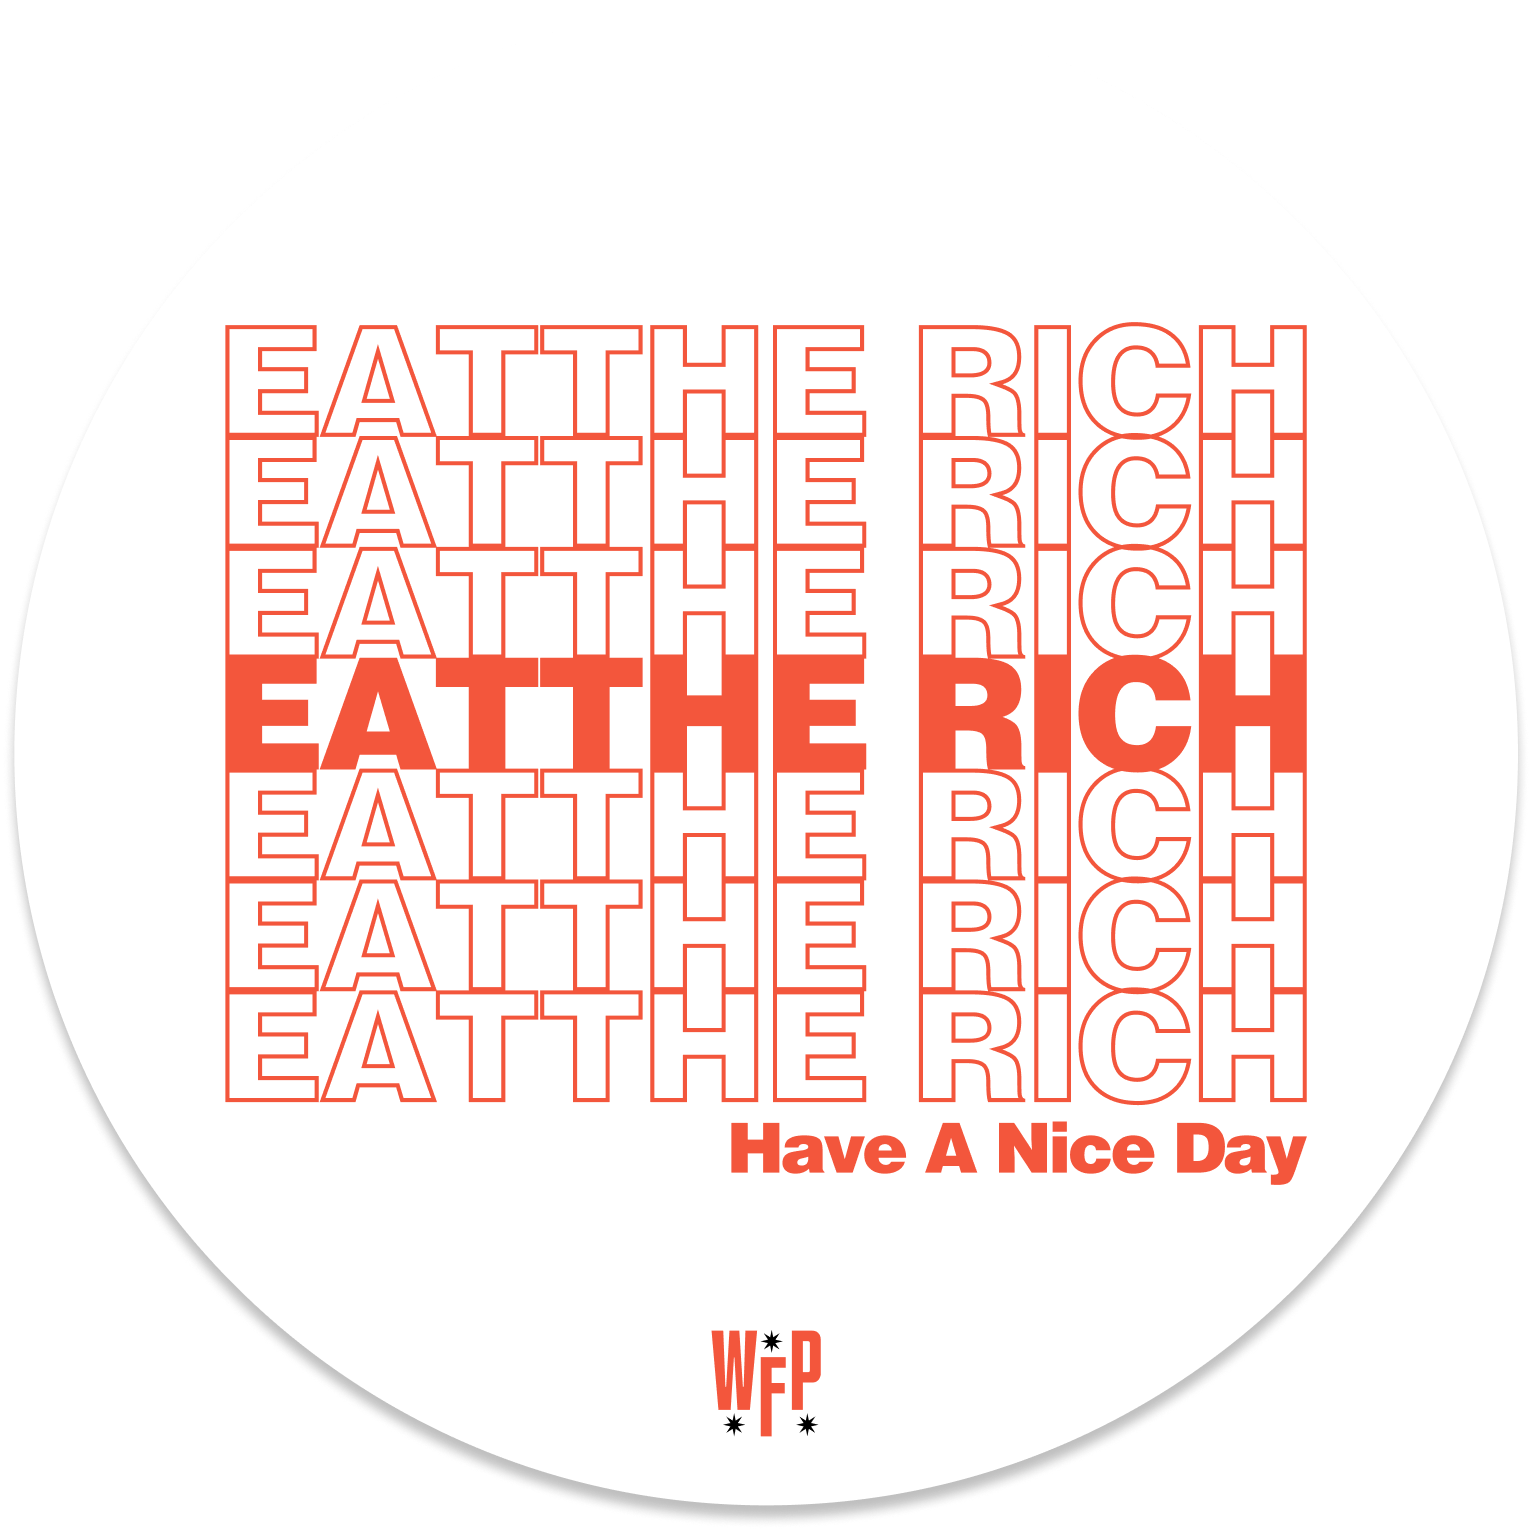 WFP "Eat the Rich" sticker